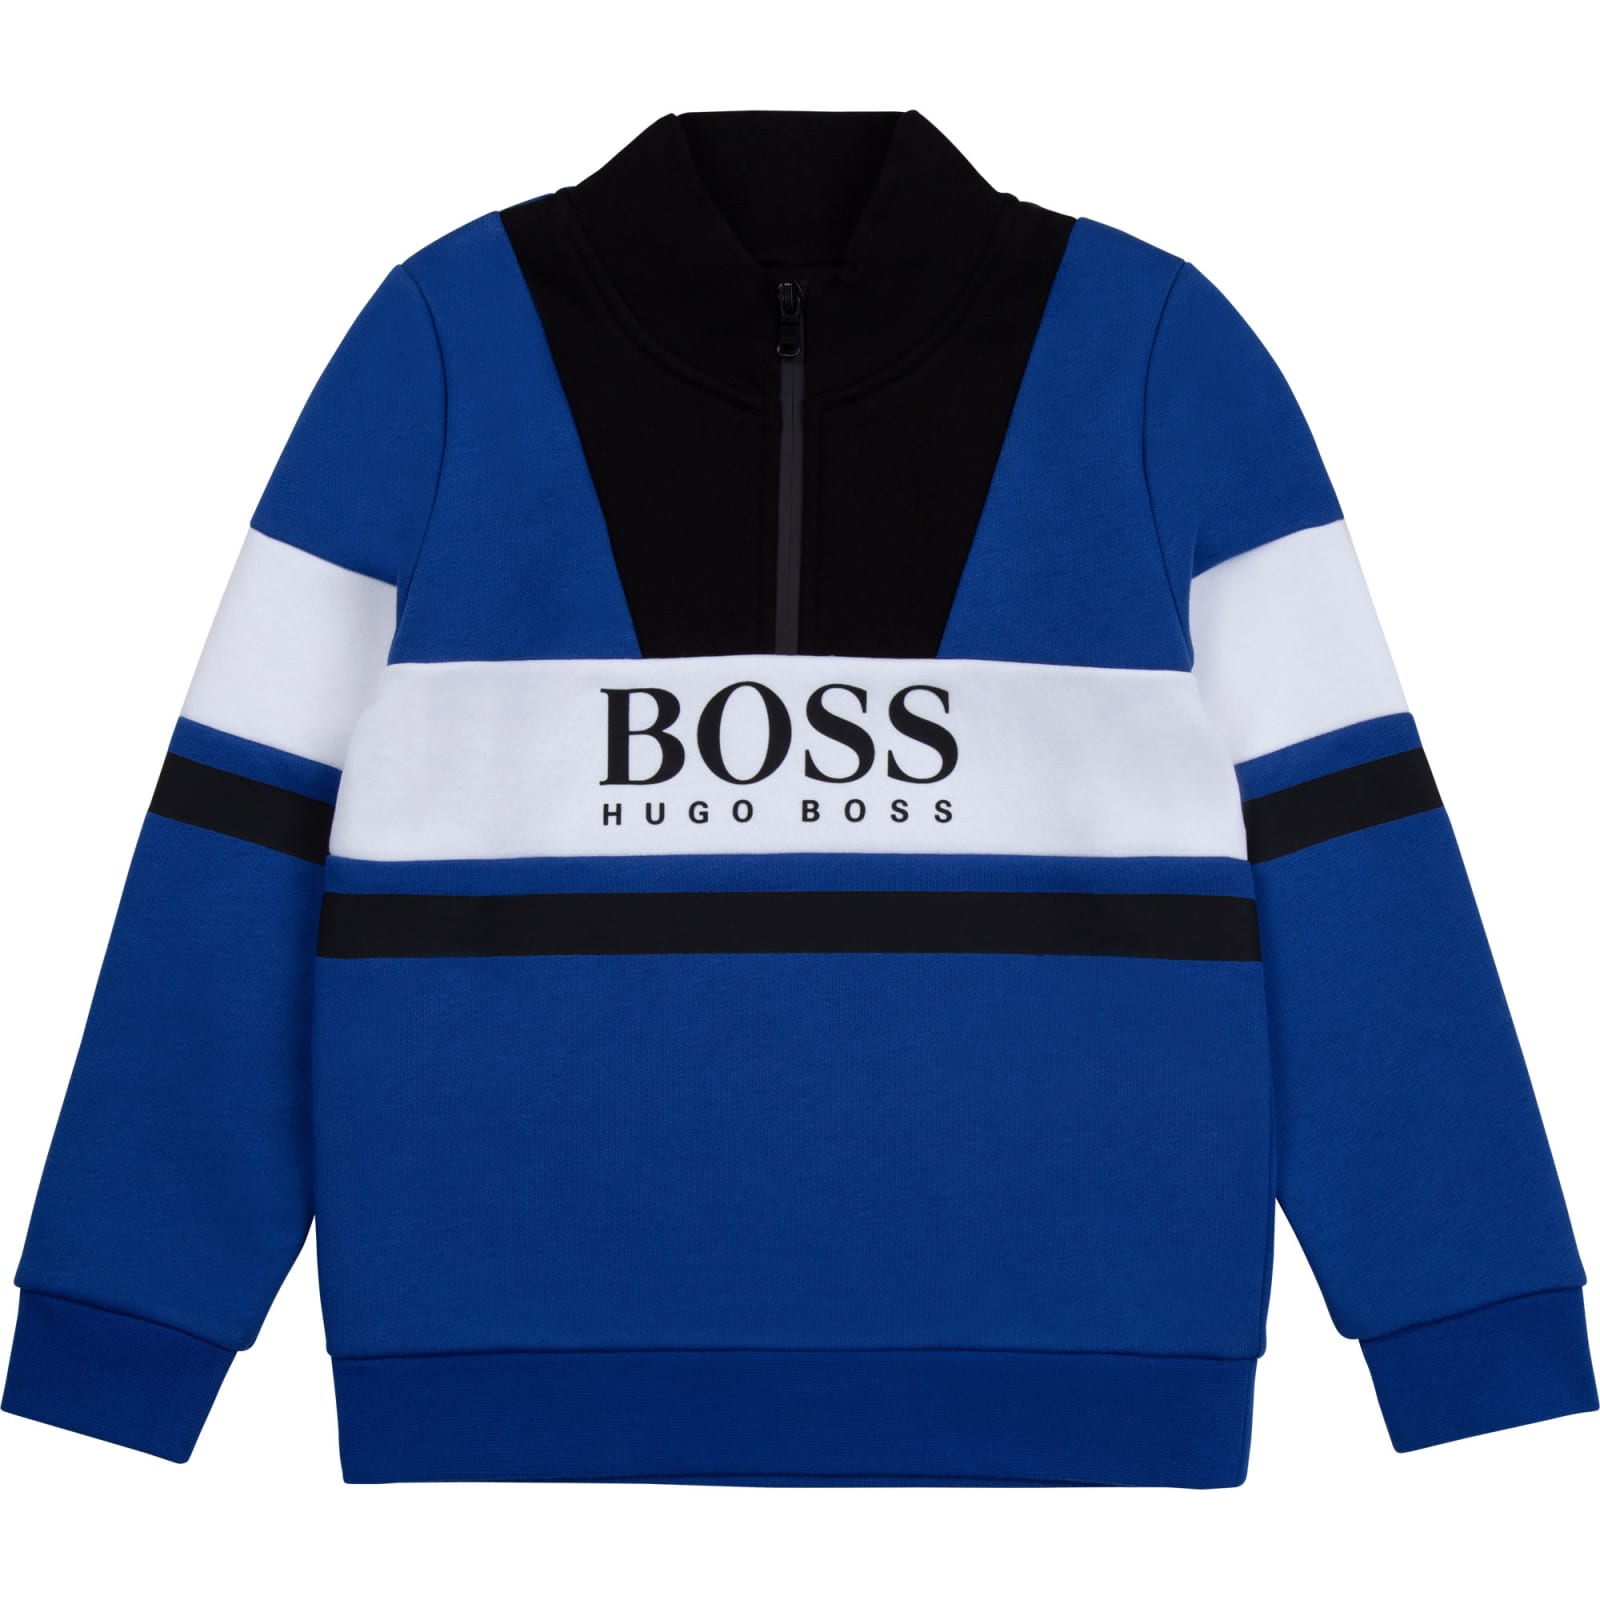 Hugo Boss Sweater With Print